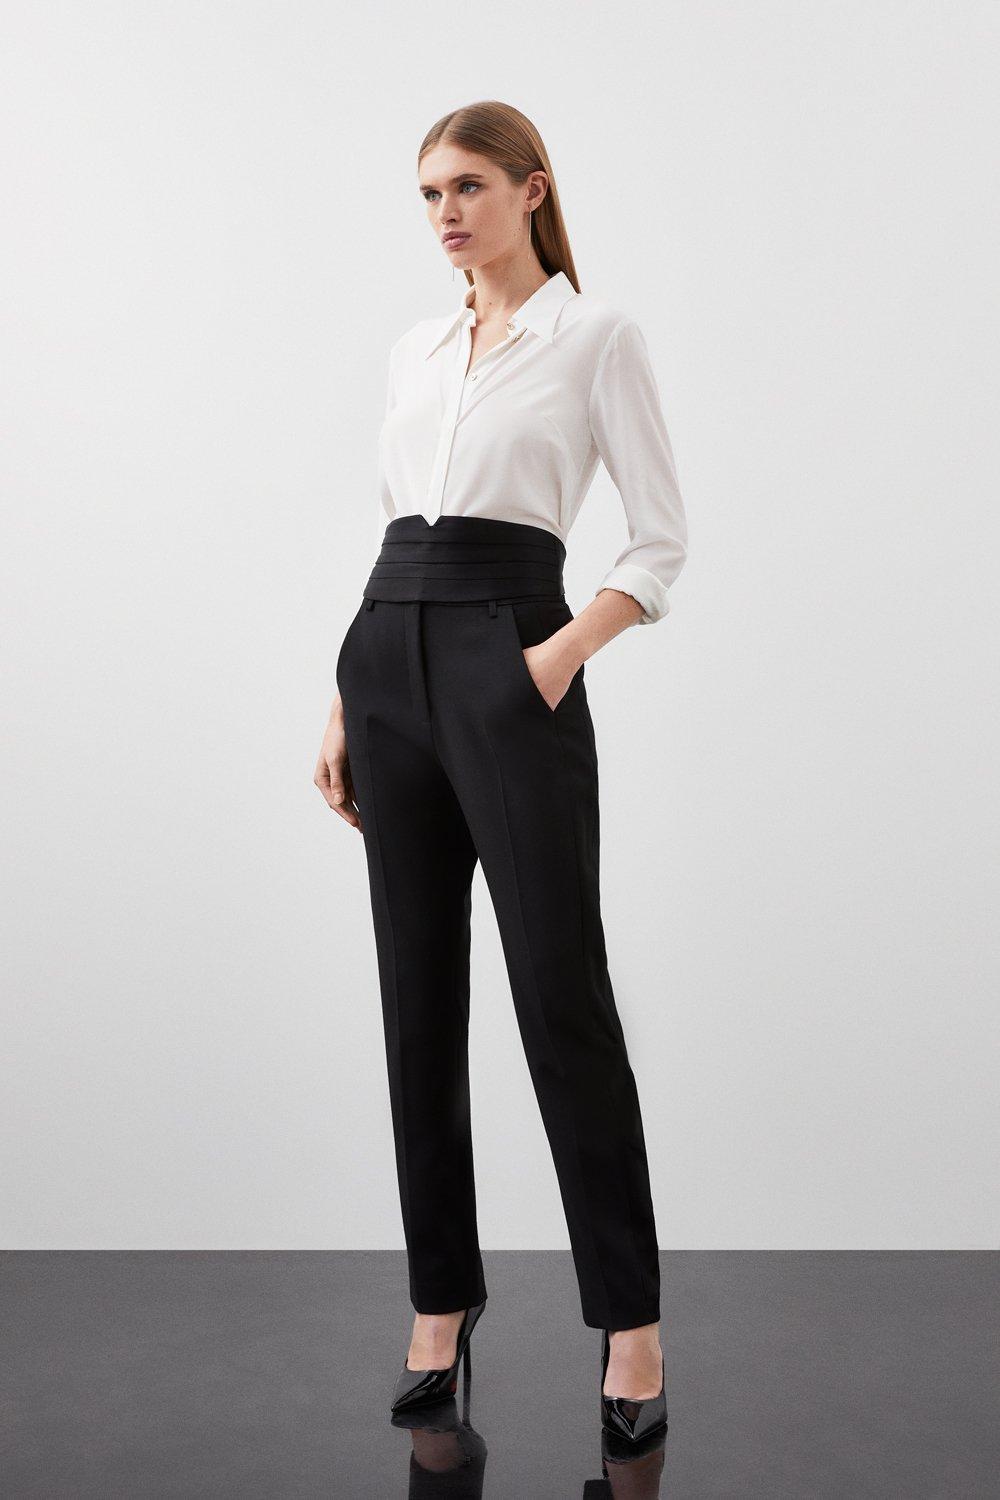 AUSIMIAR Stretch Skinny Dress Pants for Women Business Work Casual